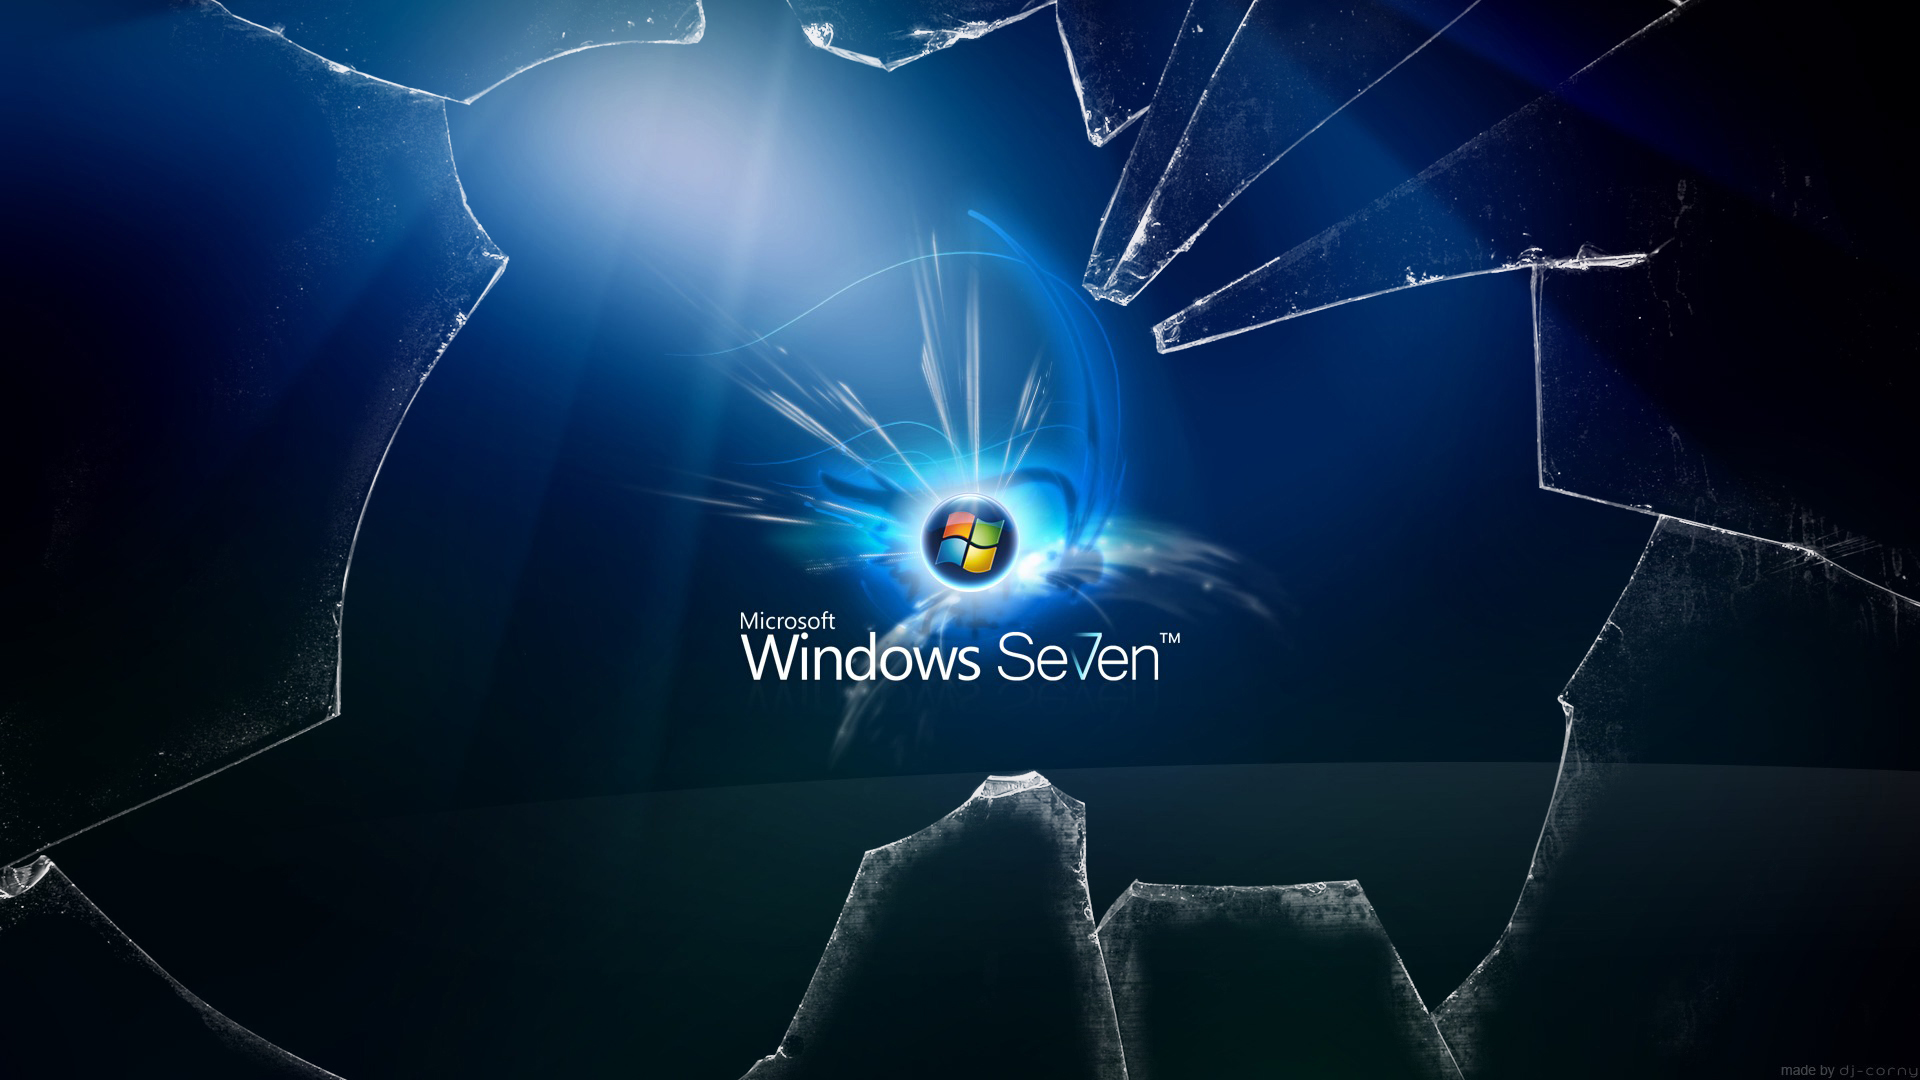 Brands Wallpaper: Windows 7 Broken Screen Desktop Wallpaper For HD ...